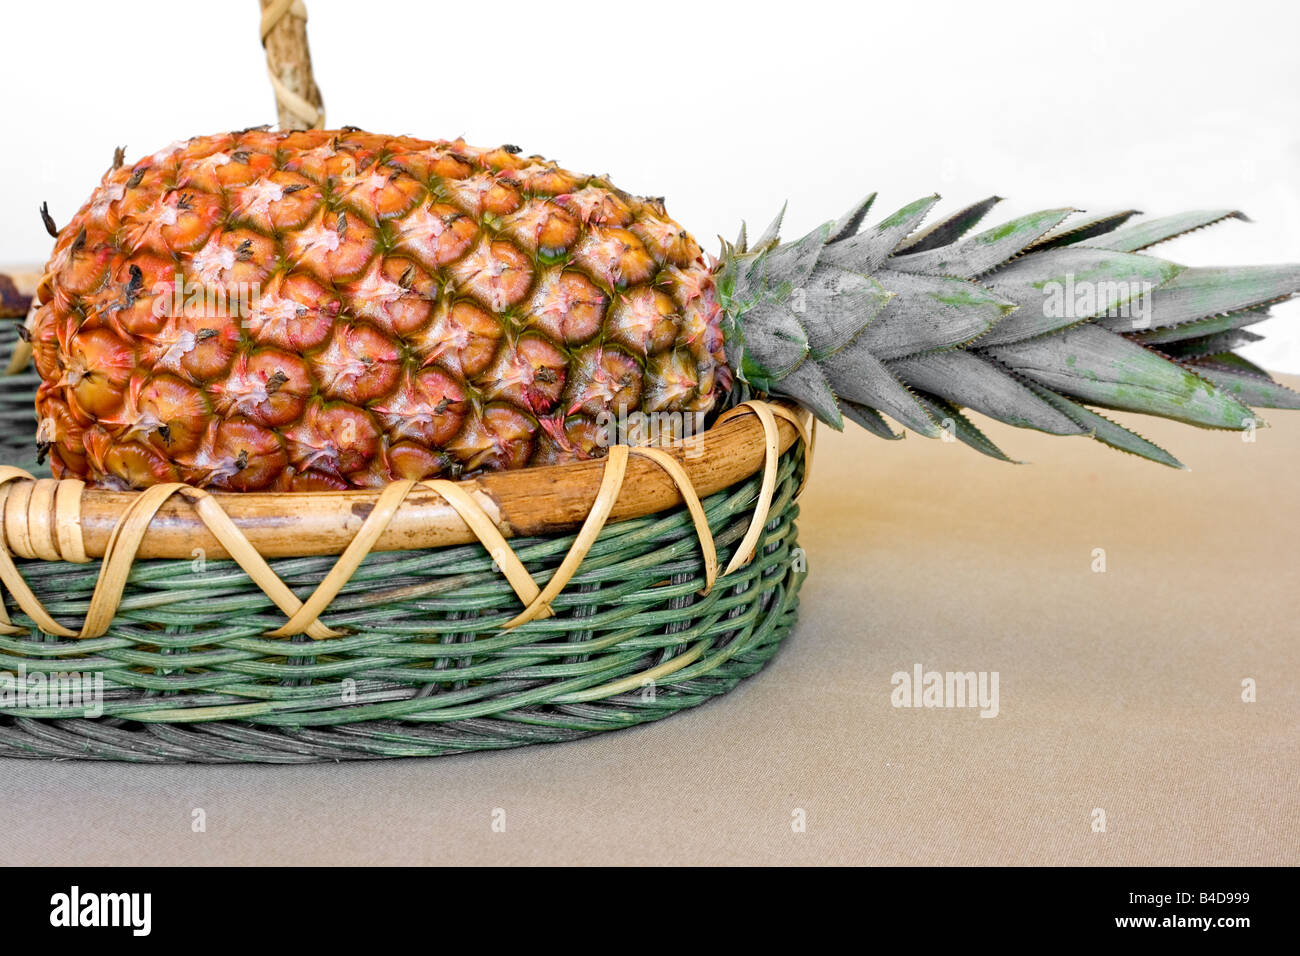 Pineapple close-up Stock Photo